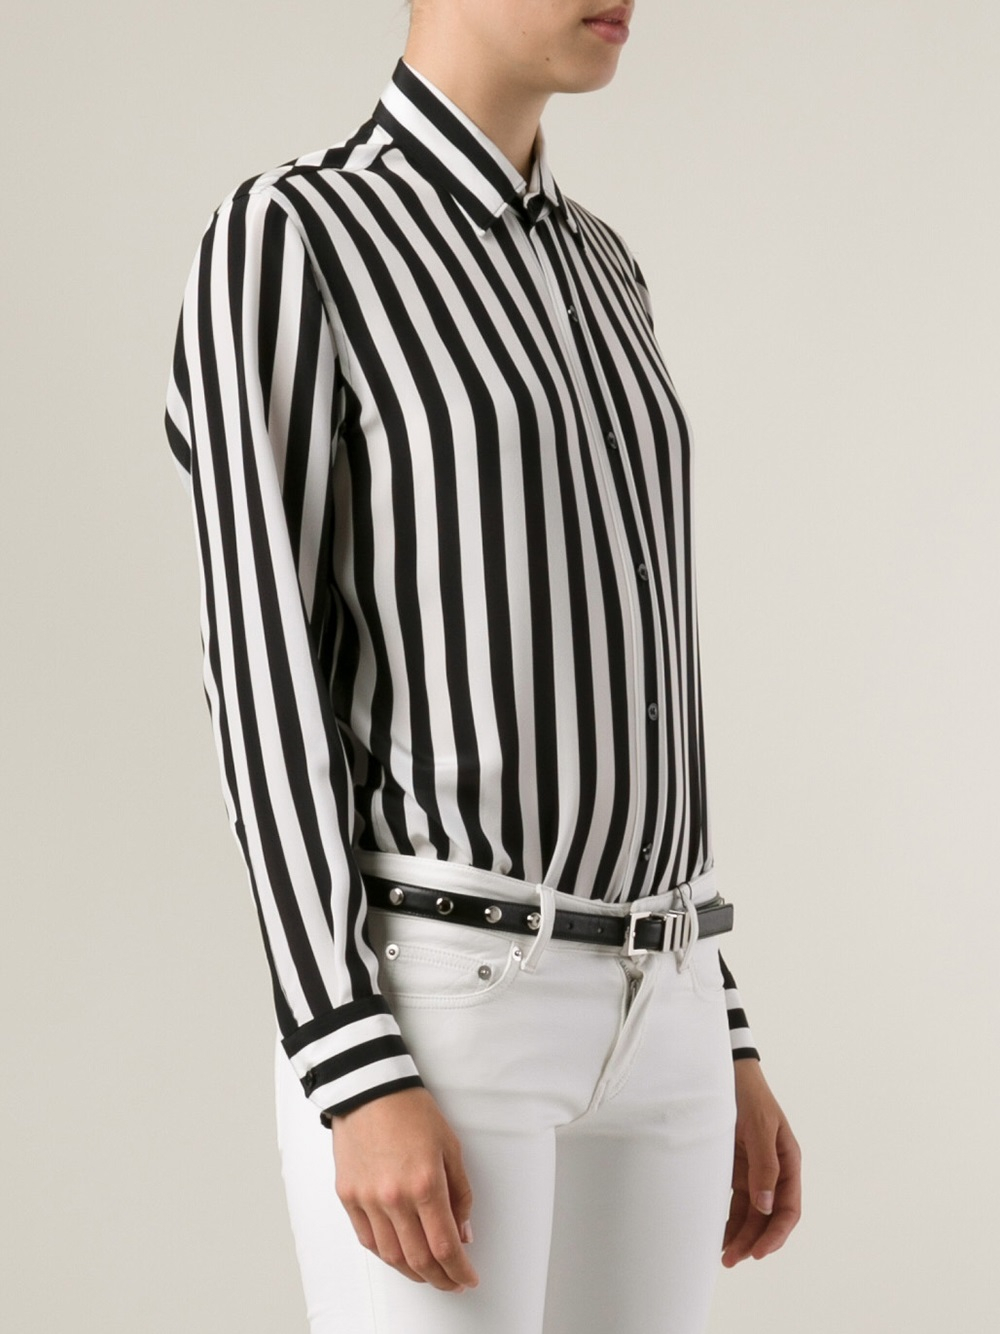 Saint Laurent Striped Shirt in Black - Lyst